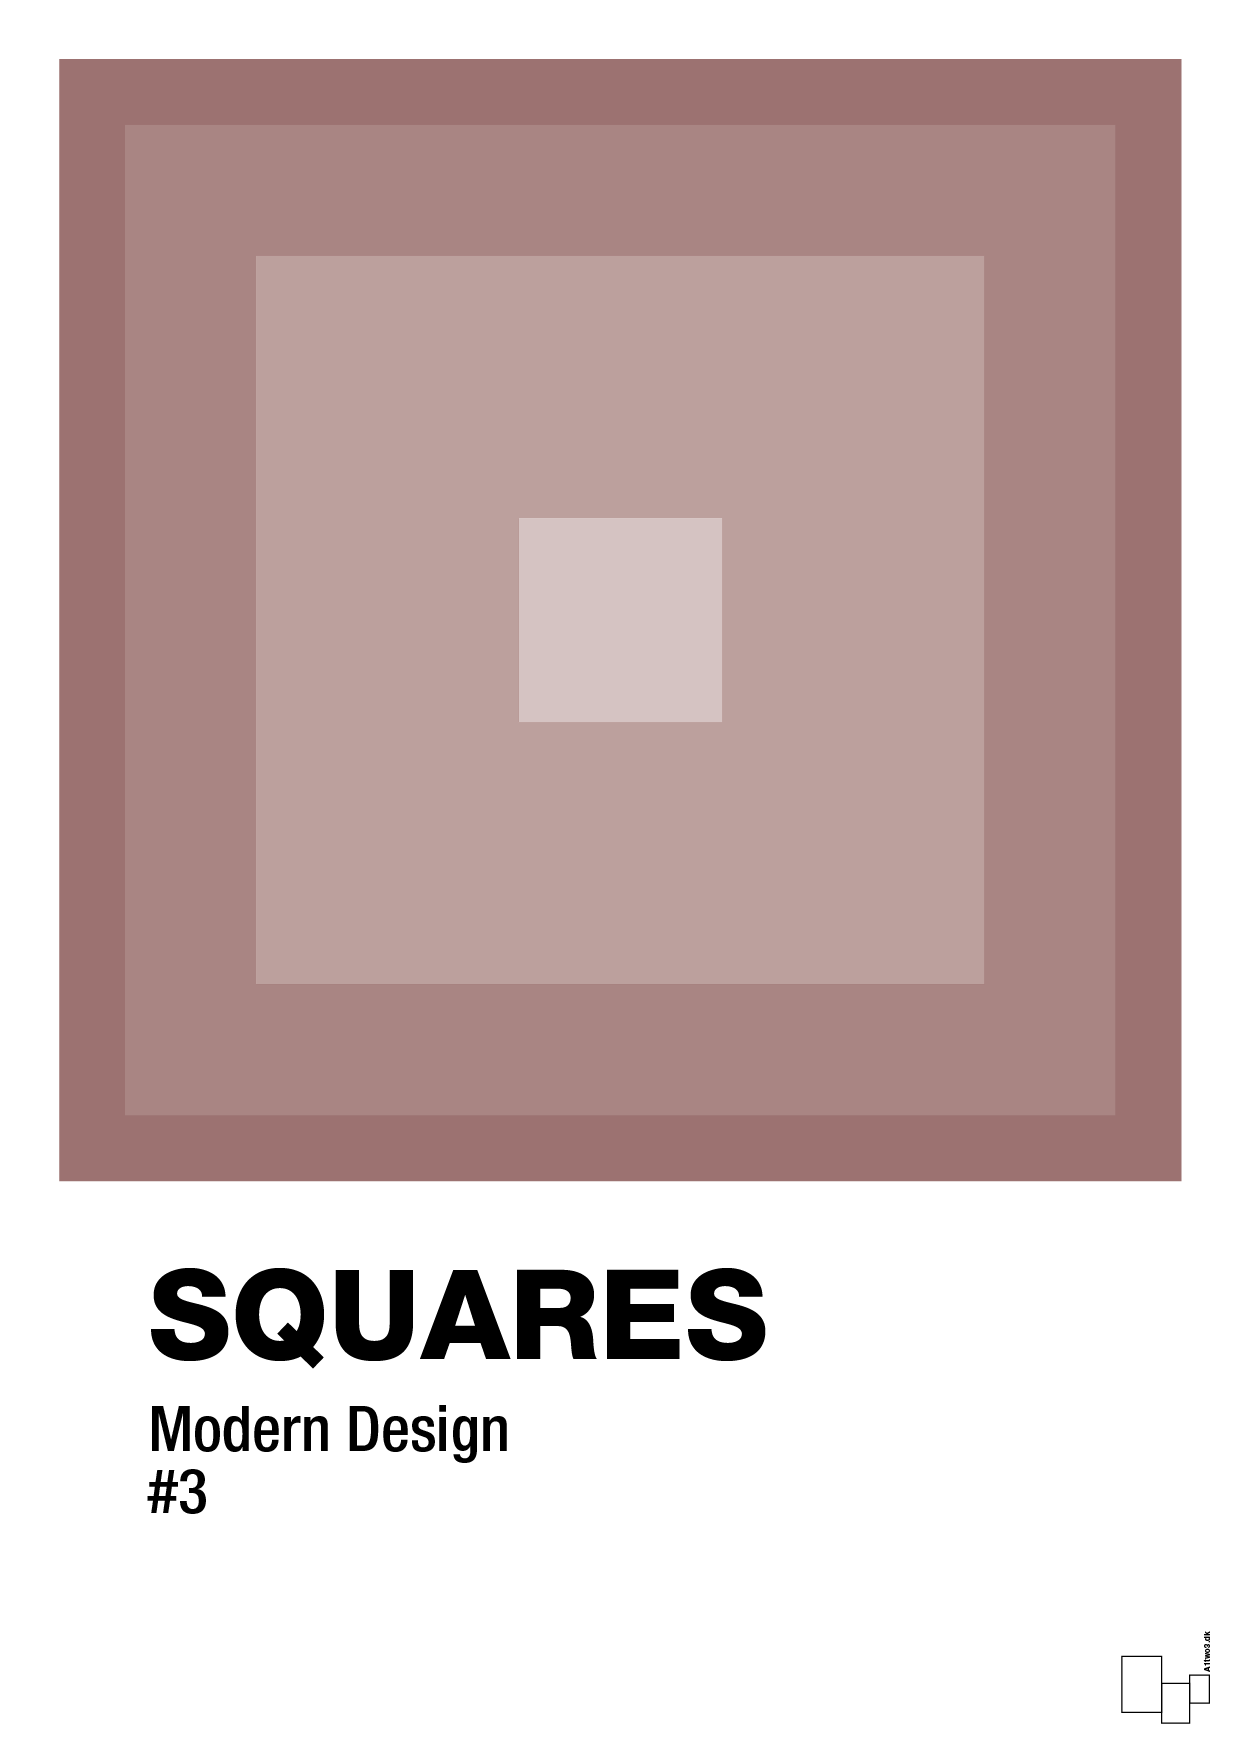 squares #3 - Plakat med Grafik i Plum